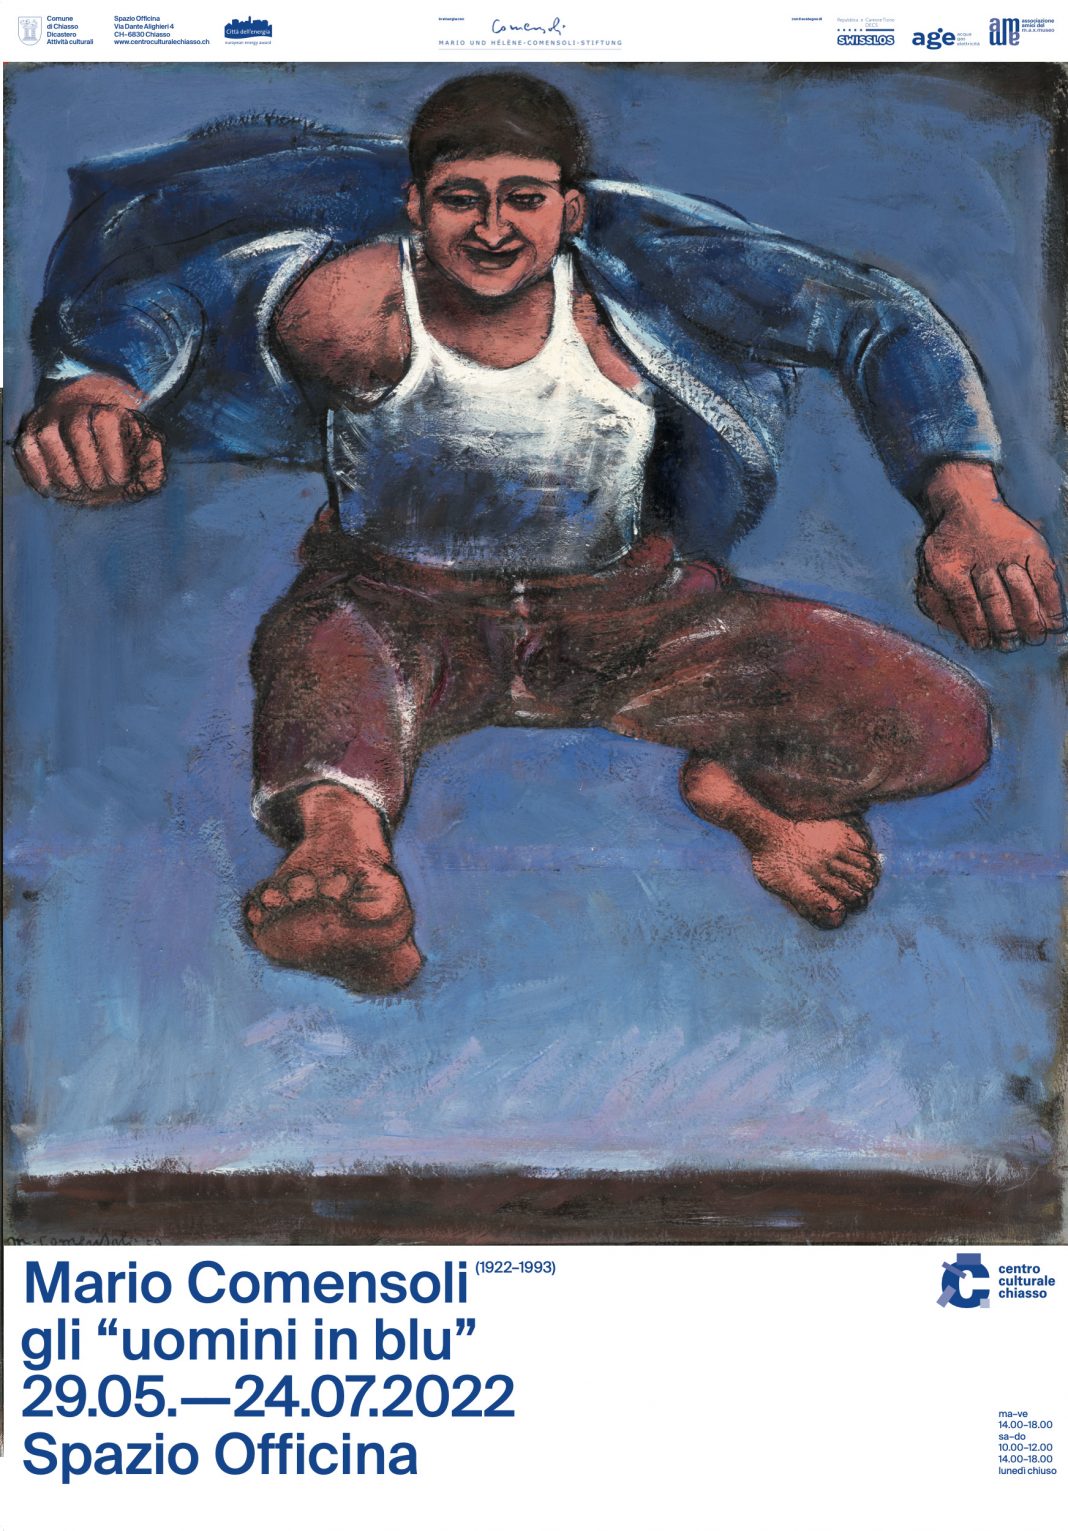 Mario Comensoli (1922-1993). Gli “uomini in blu”https://www.exibart.com/repository/media/formidable/11/img/c2a/F4_c-1068x1531.jpg